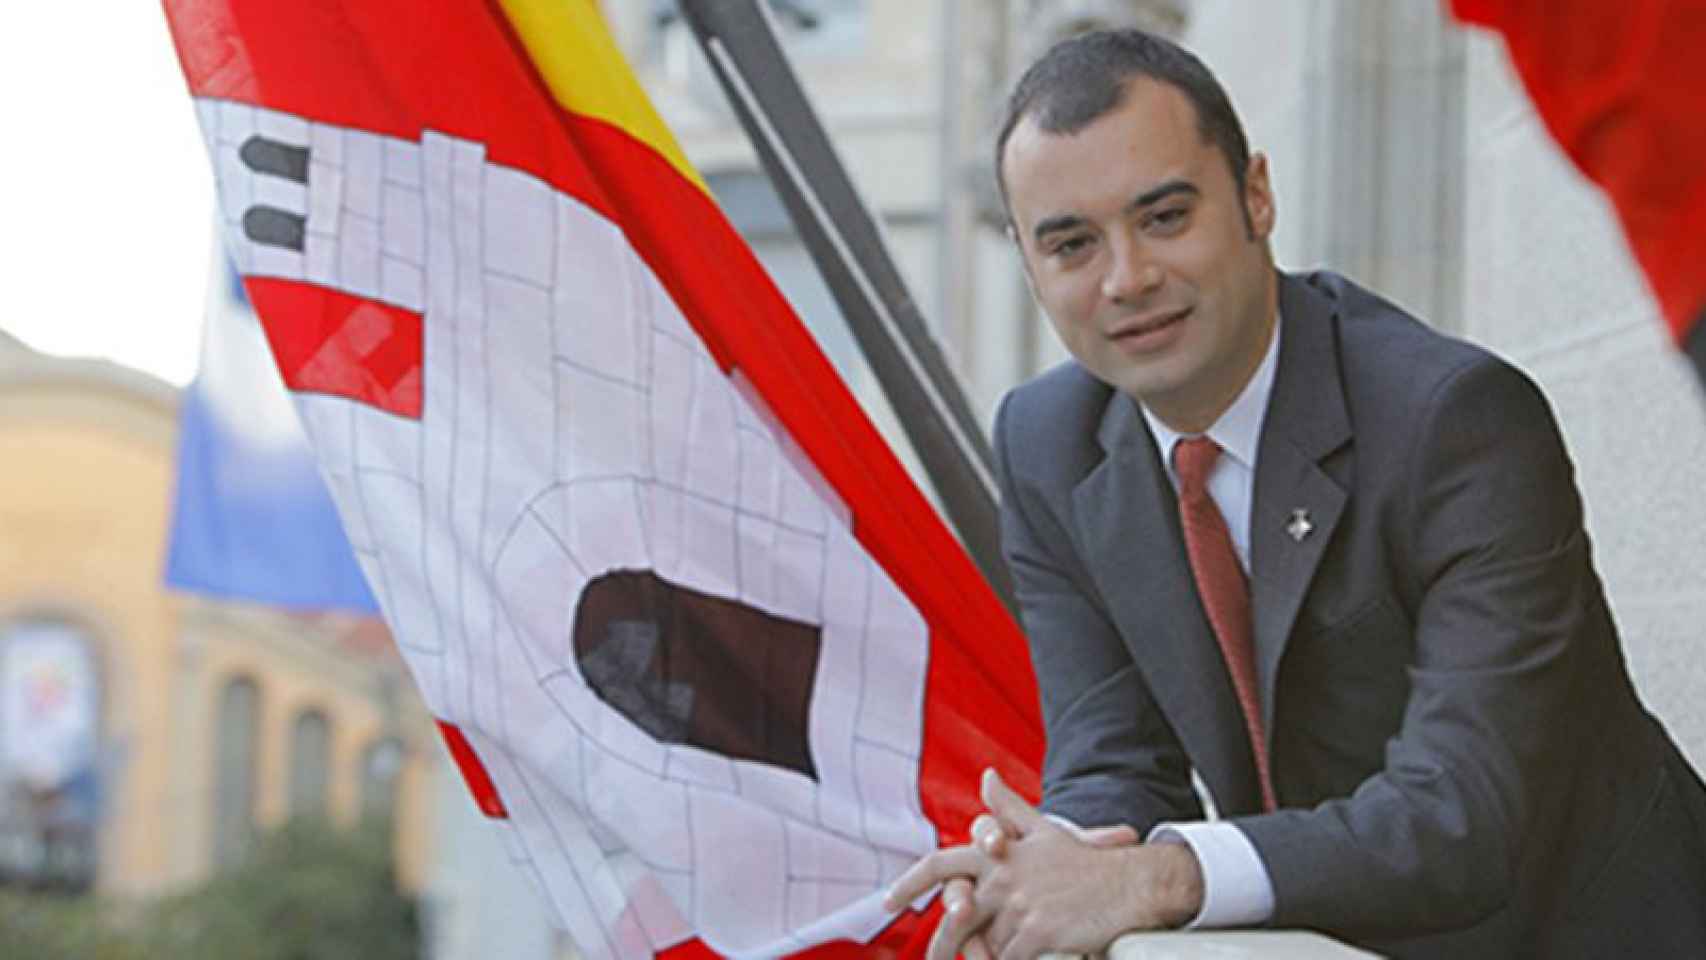 Jordi Ballart, alcalde de Terrassa (Barcelona), en una imagen de archivo / CG